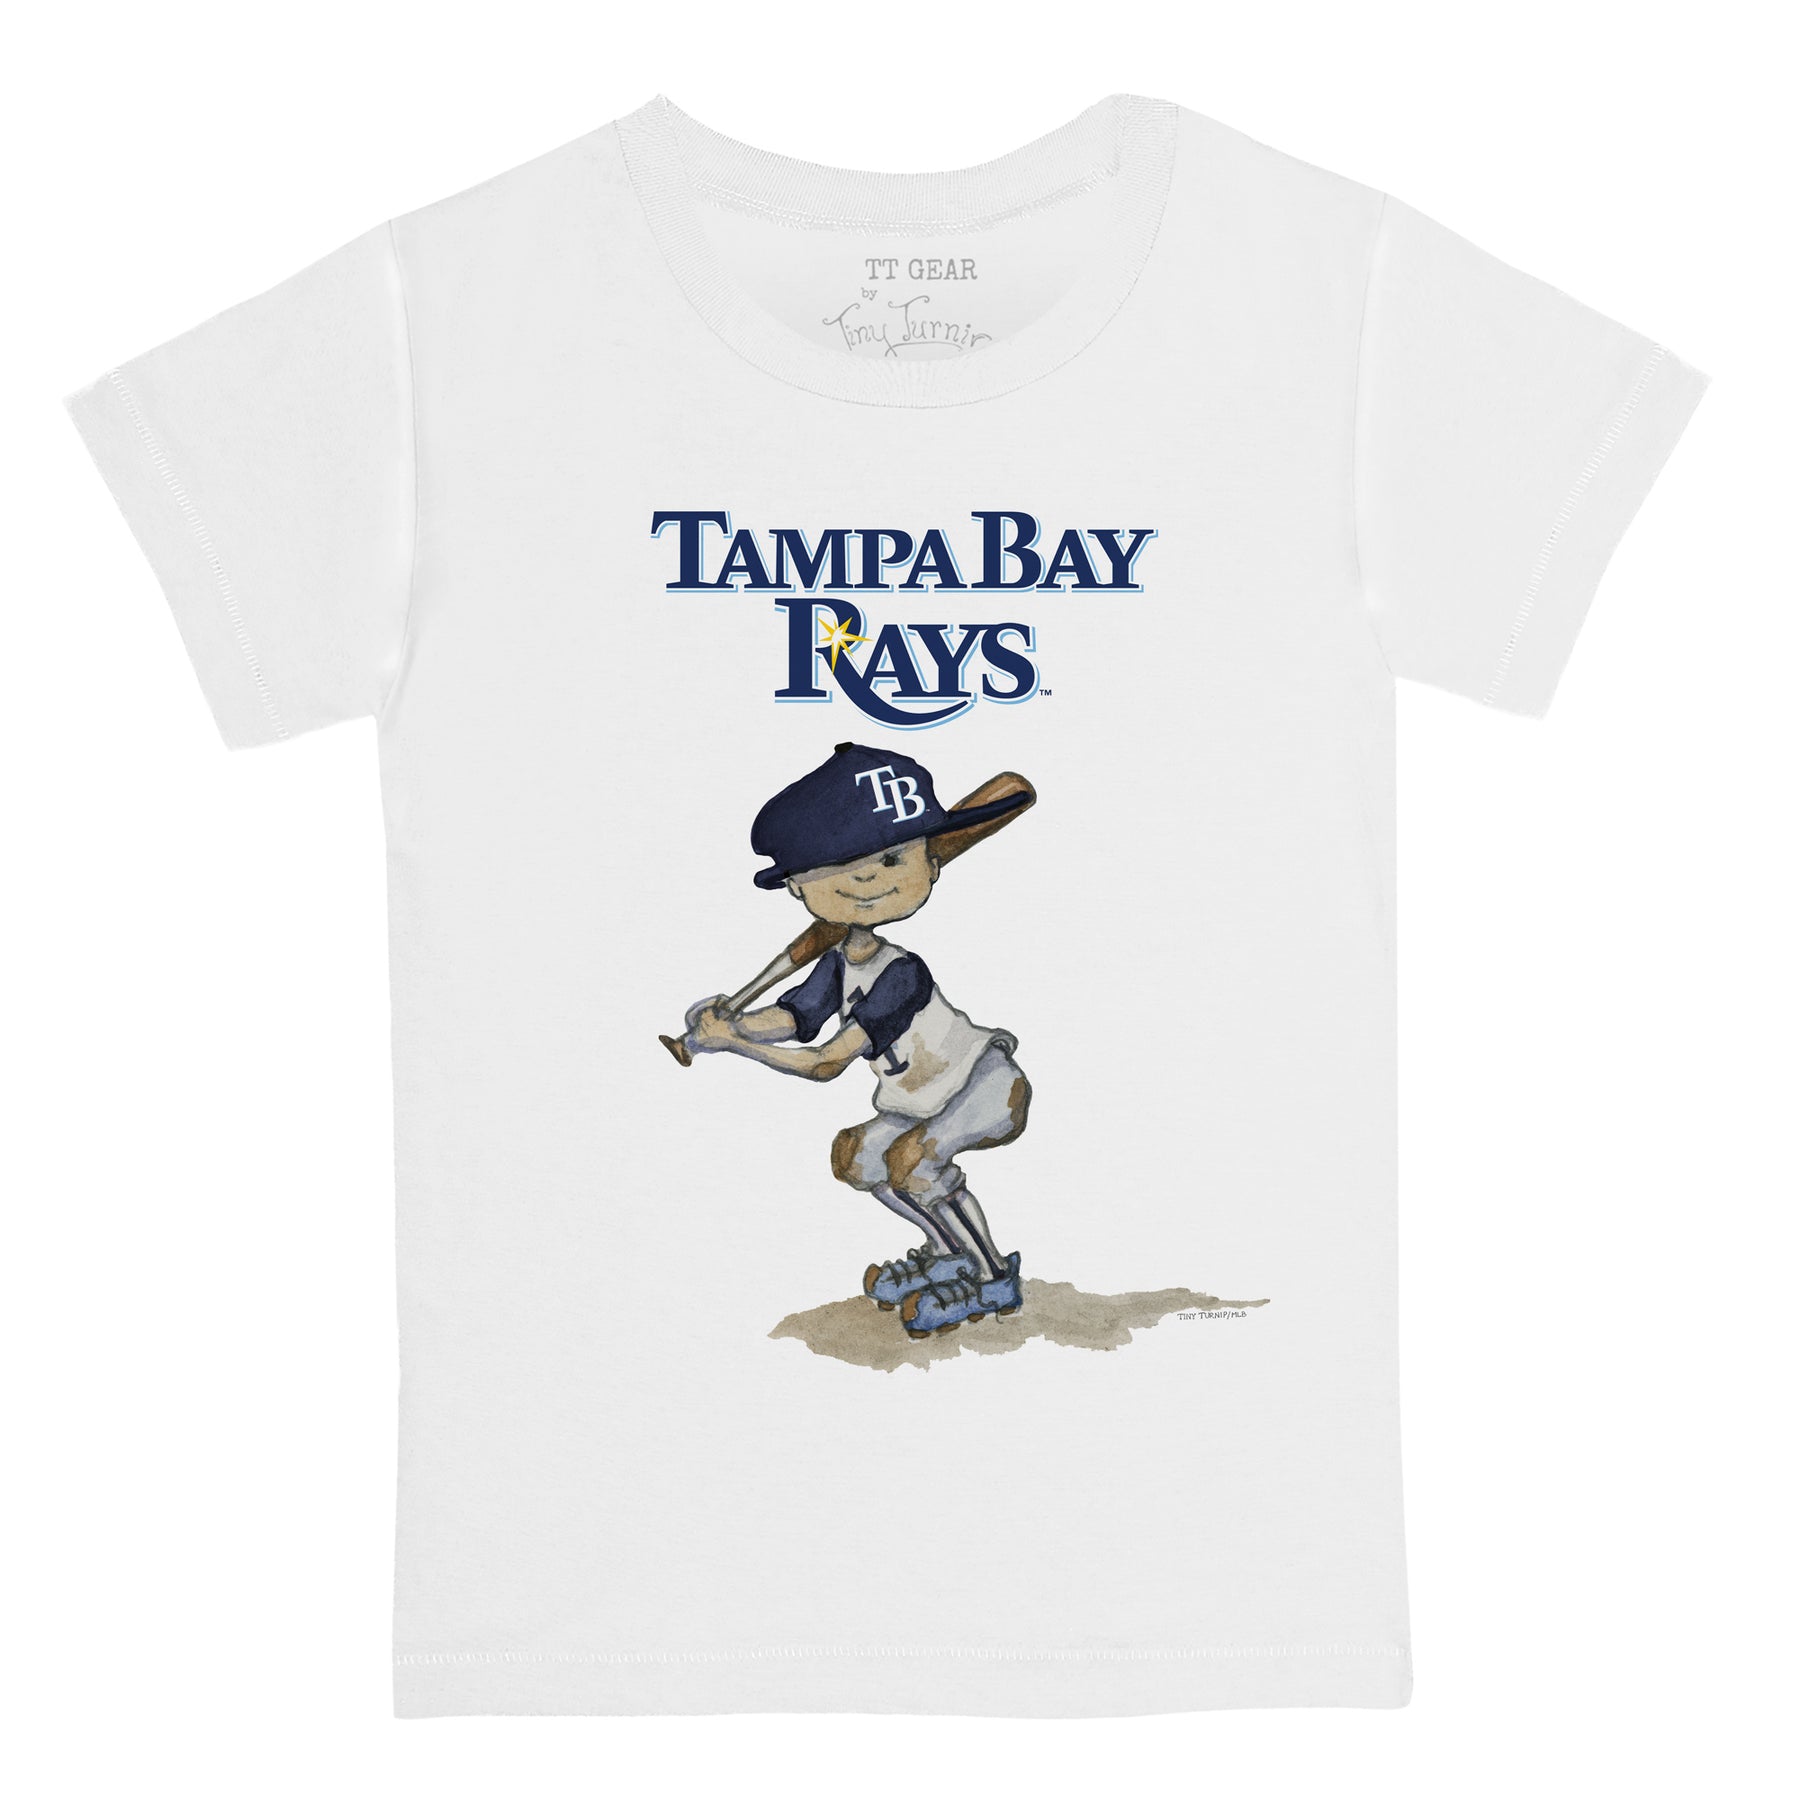 tampa bay rays t shirts near me